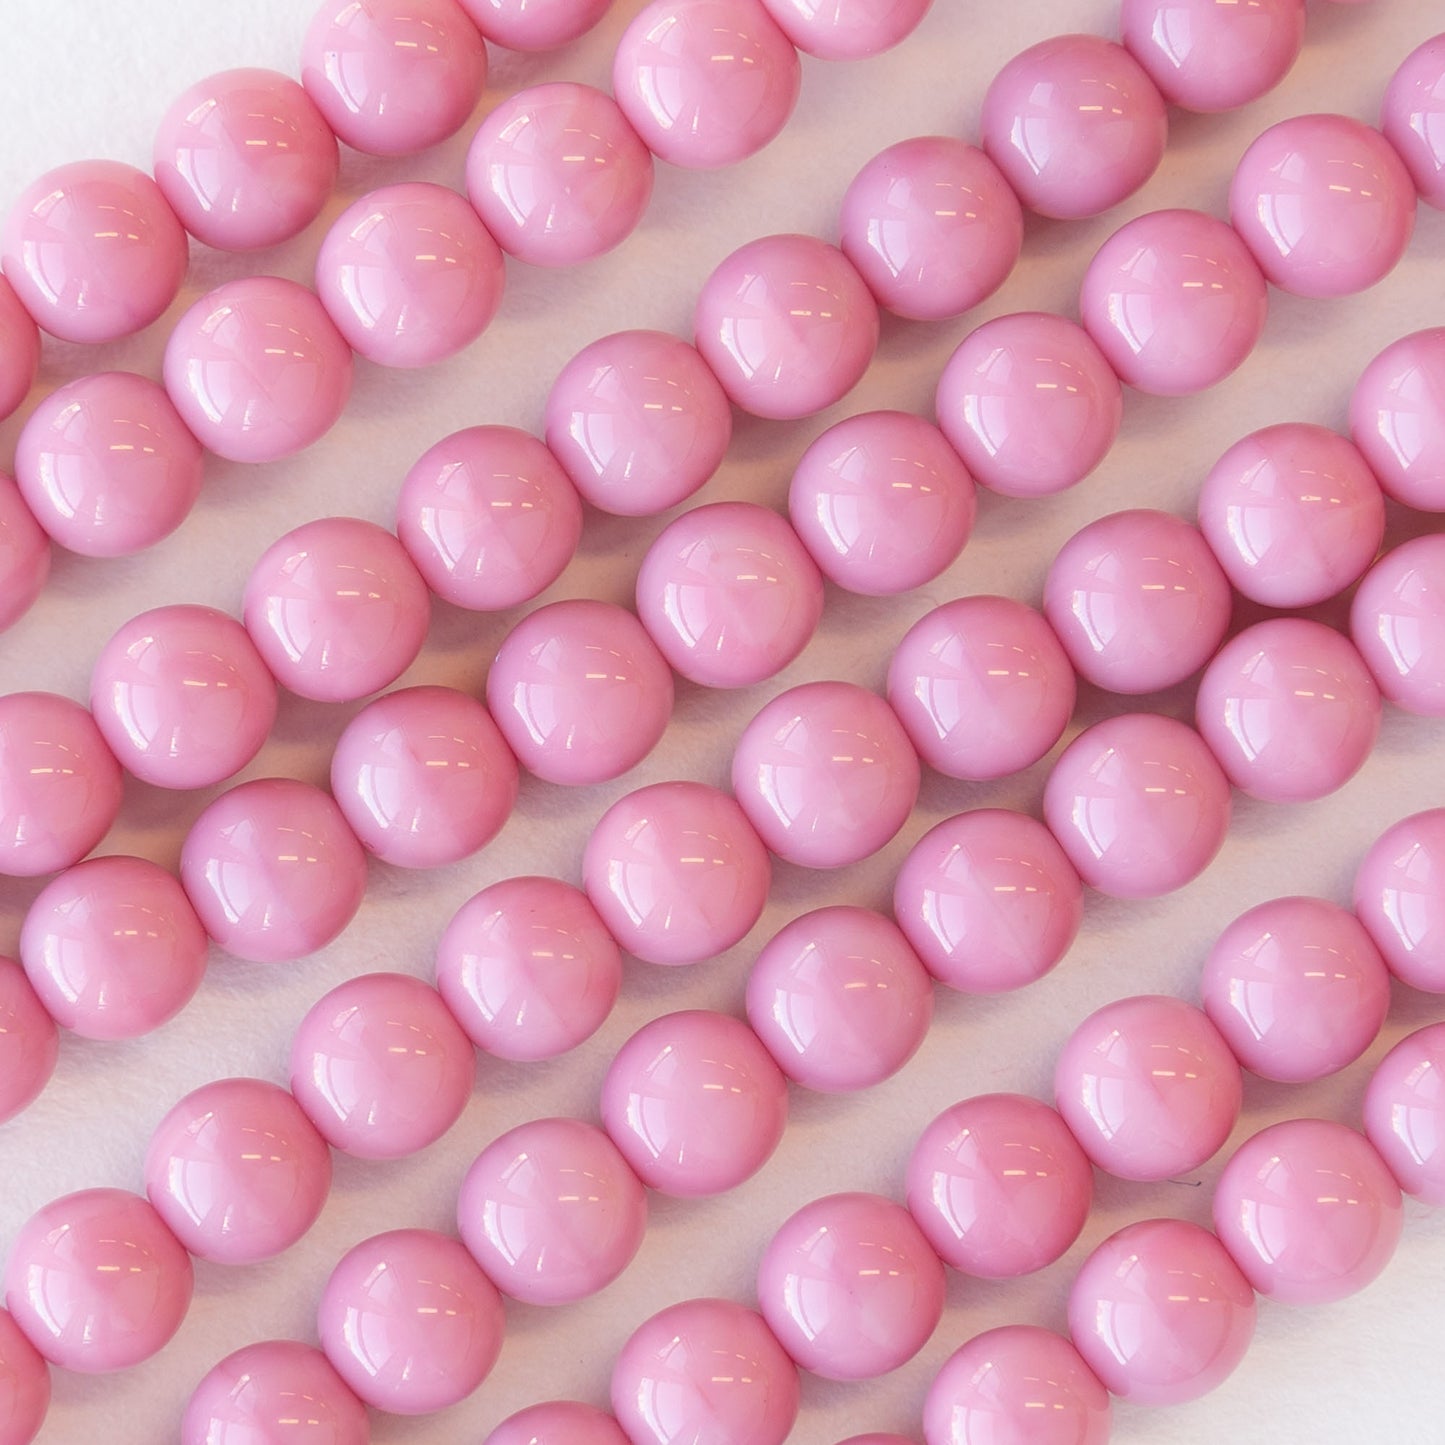 6mm Round Glass Beads - Pink - 20 Beads